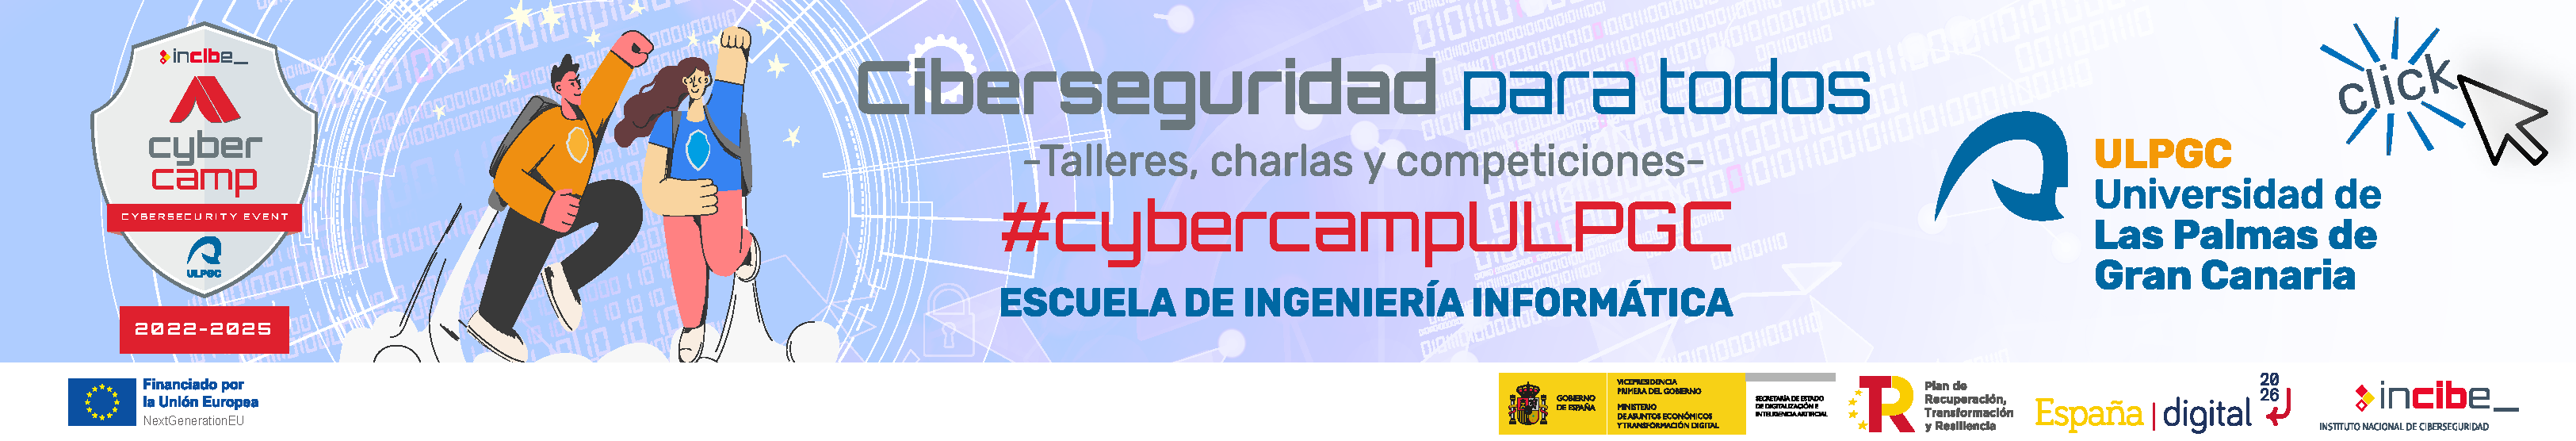 CybercampULPGC